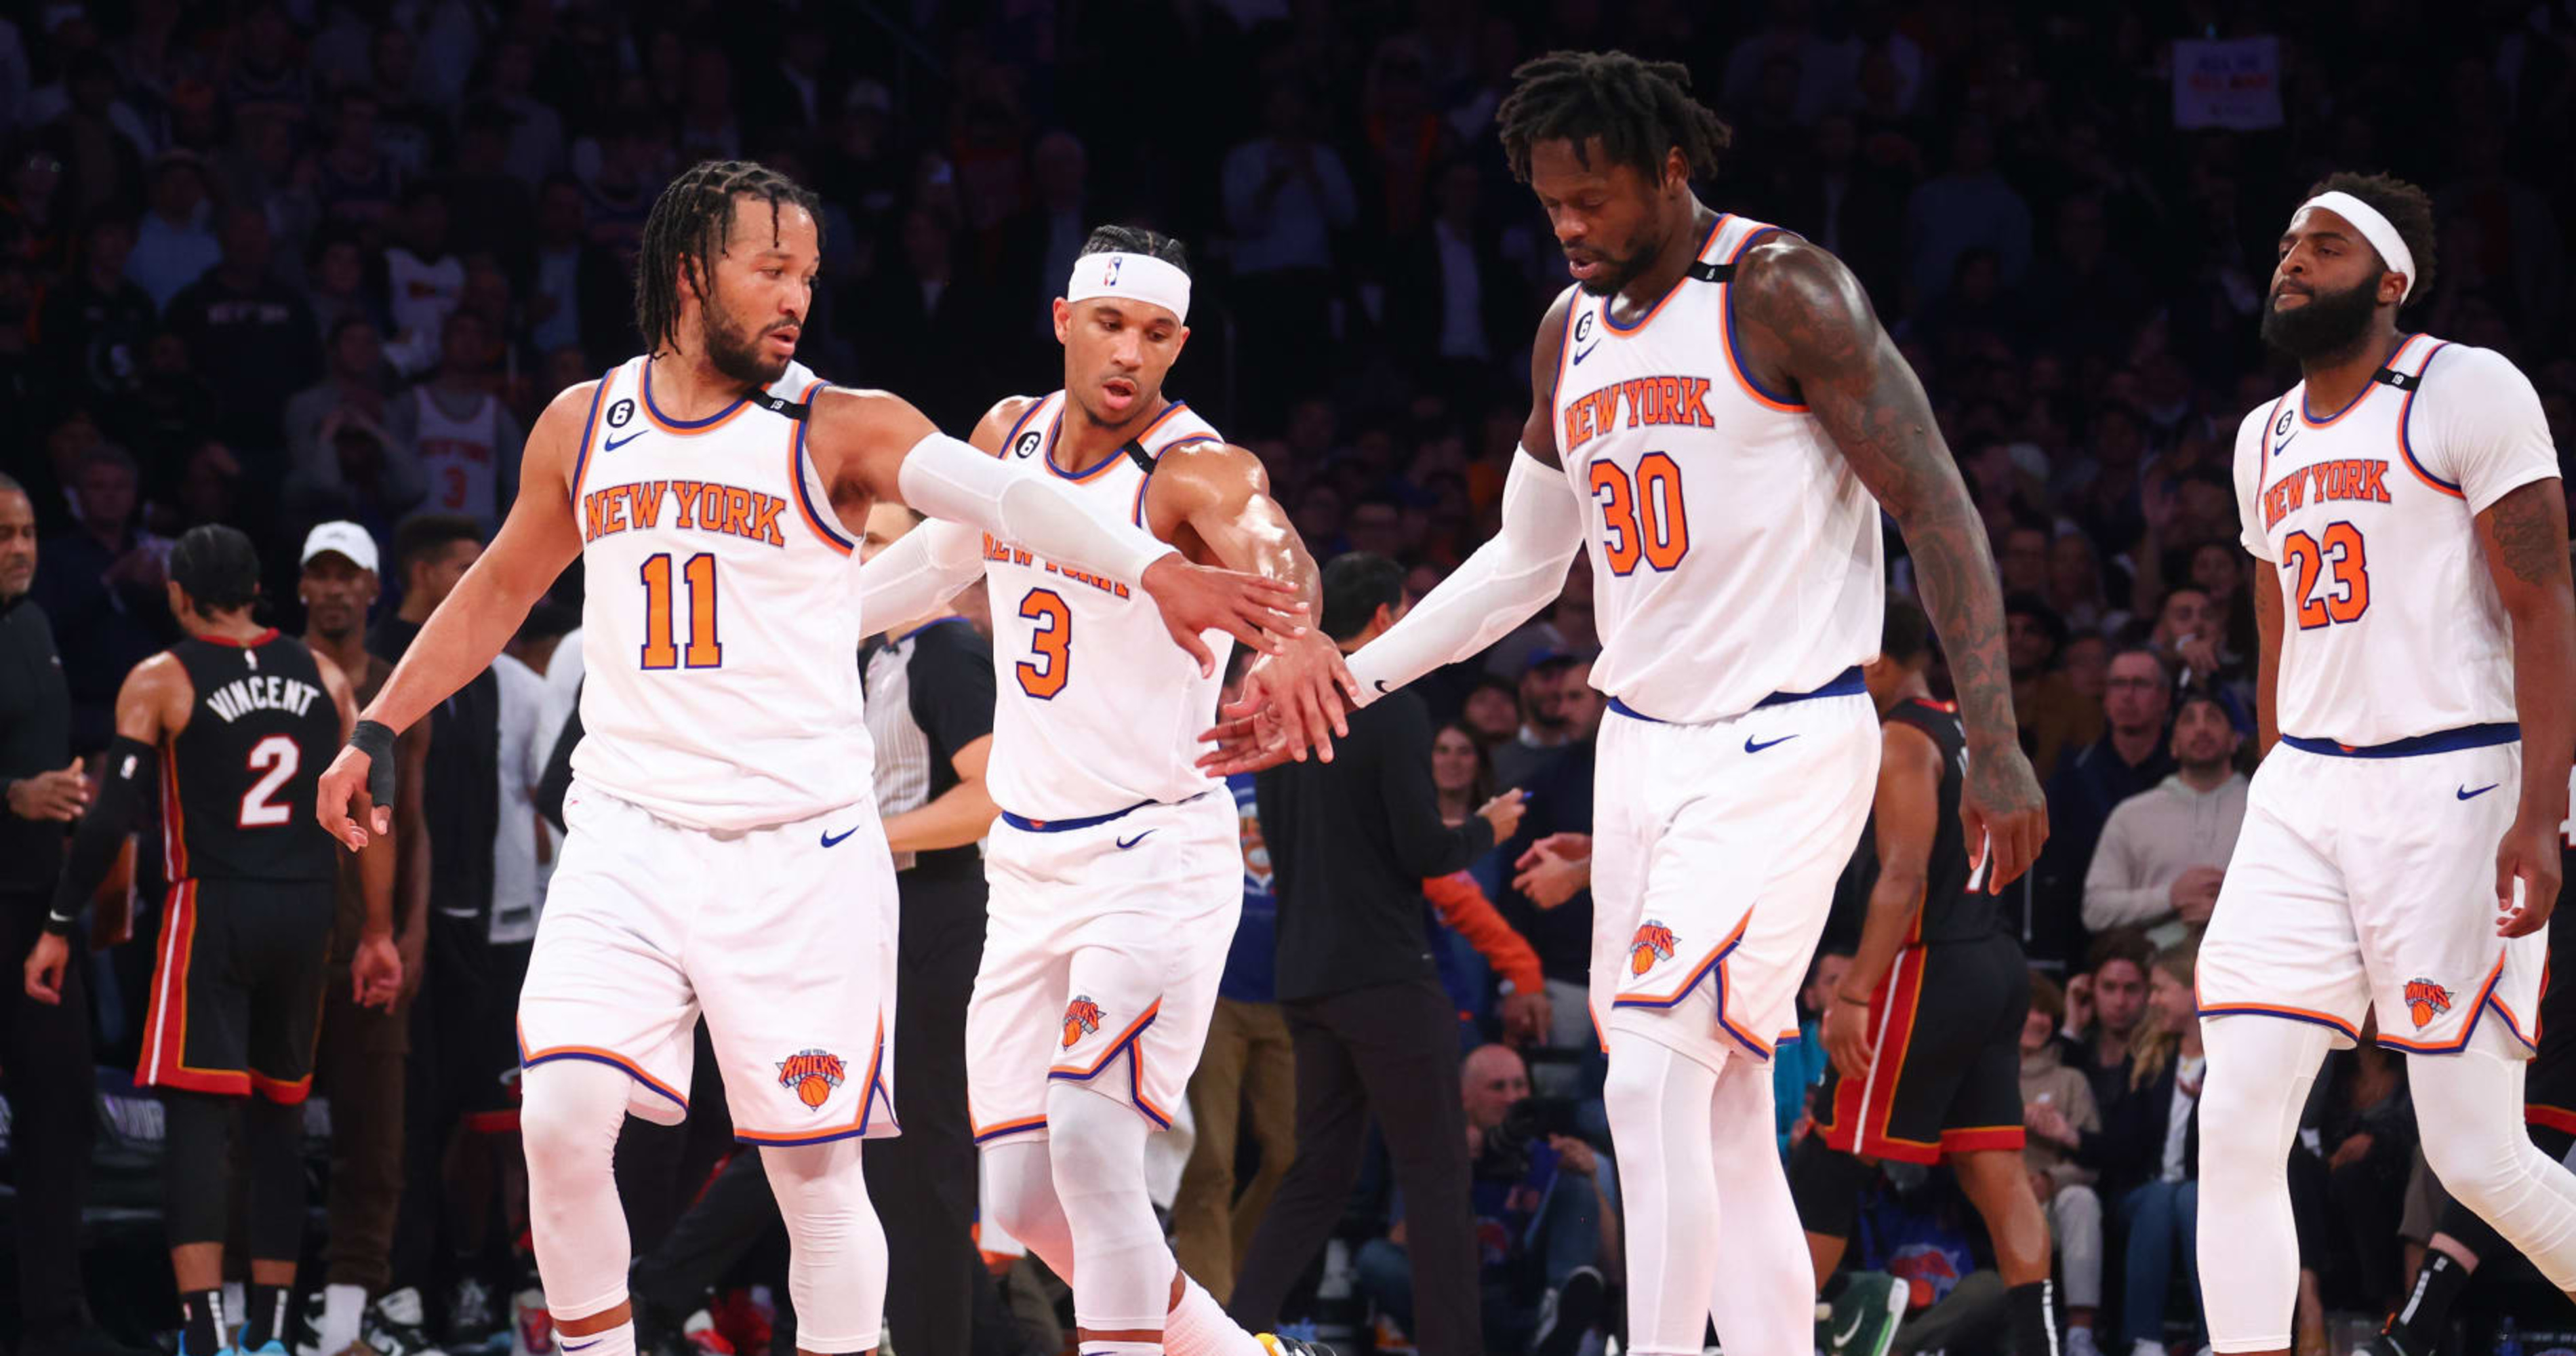 Who are the true New York sports teams? : r/NYKnicks